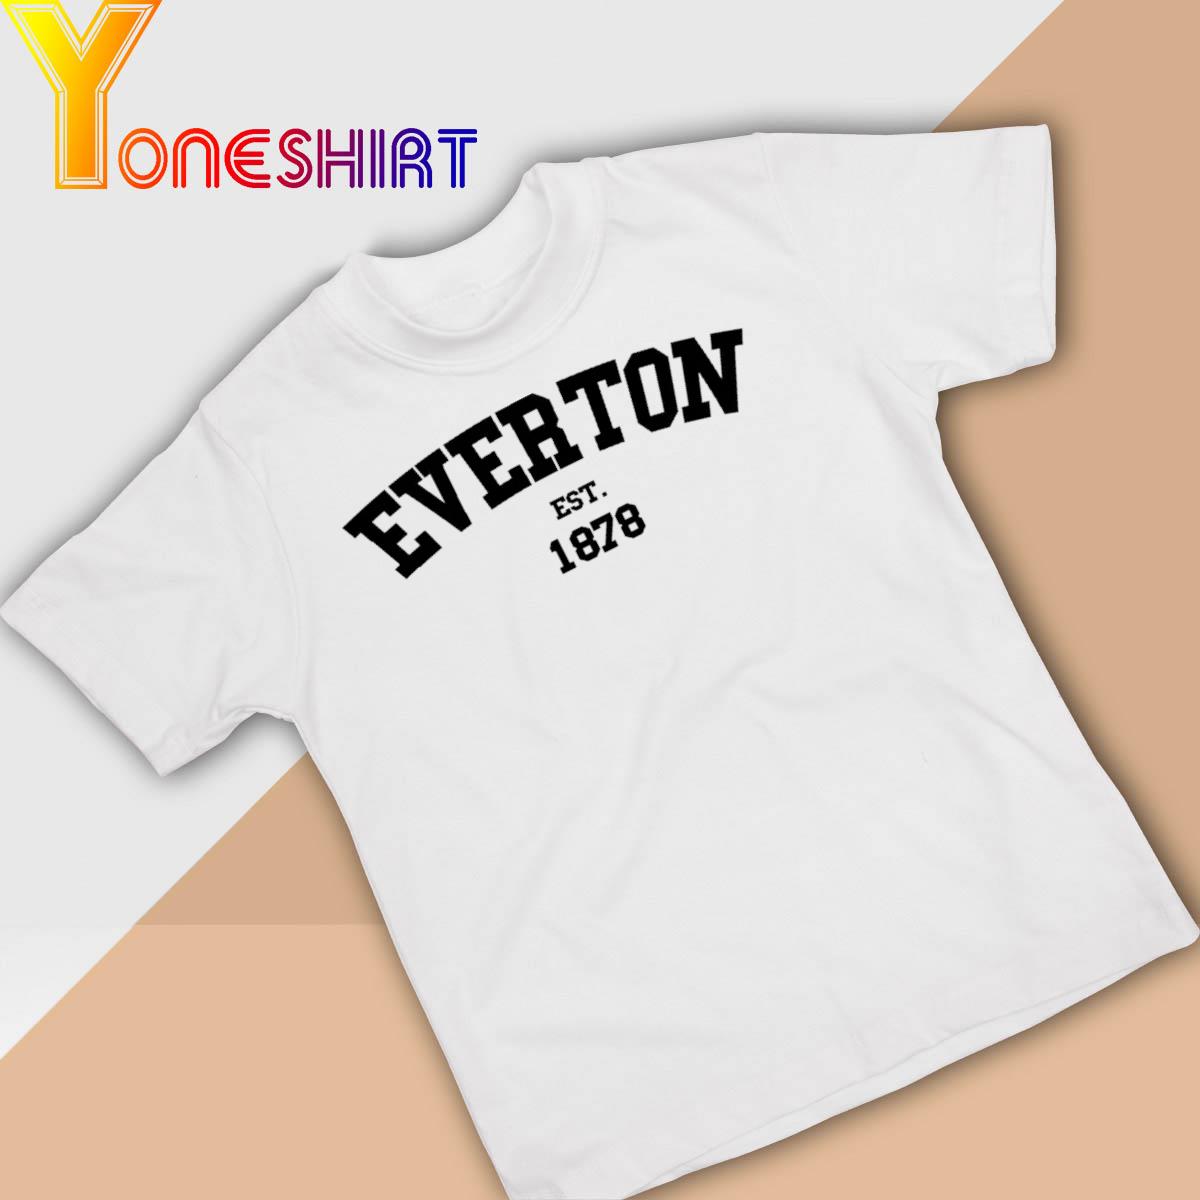 Everton est 1878 shirt